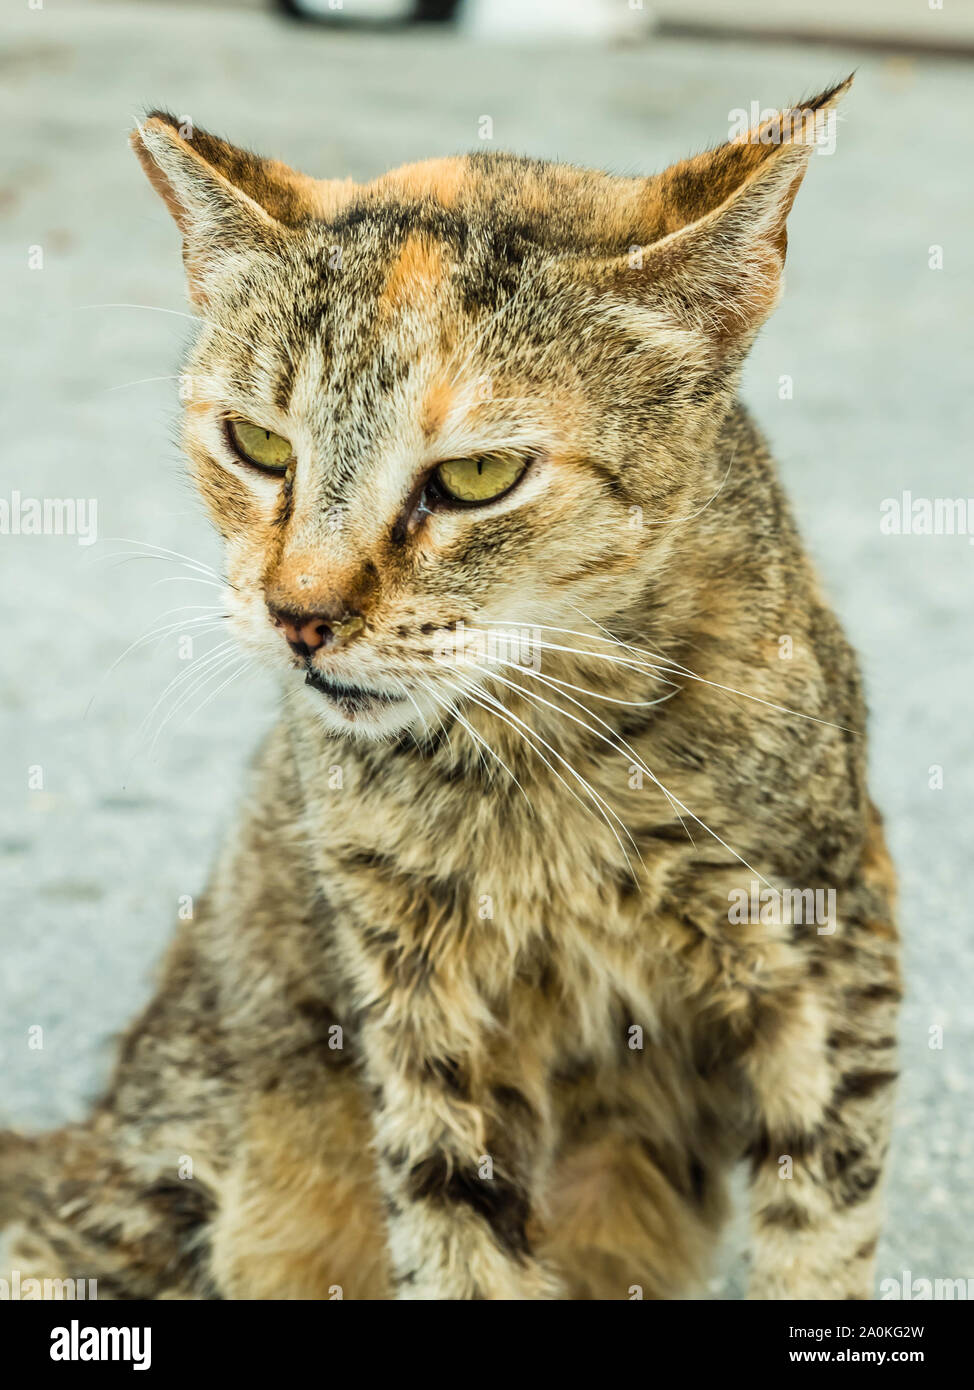 Ferel cat Stock Photo